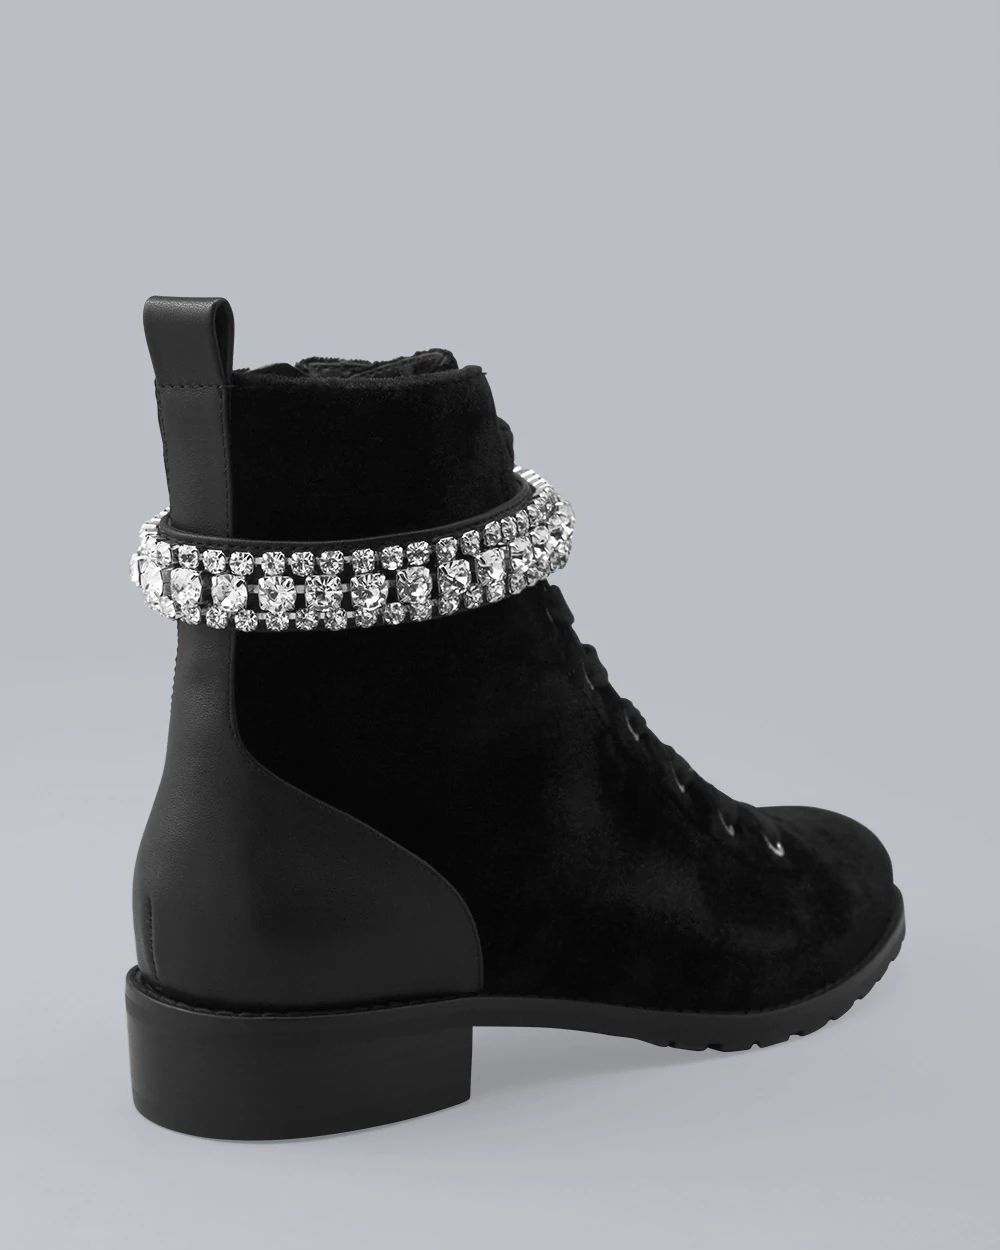 Crystal-Embellished Velvet Boots click to view larger image.